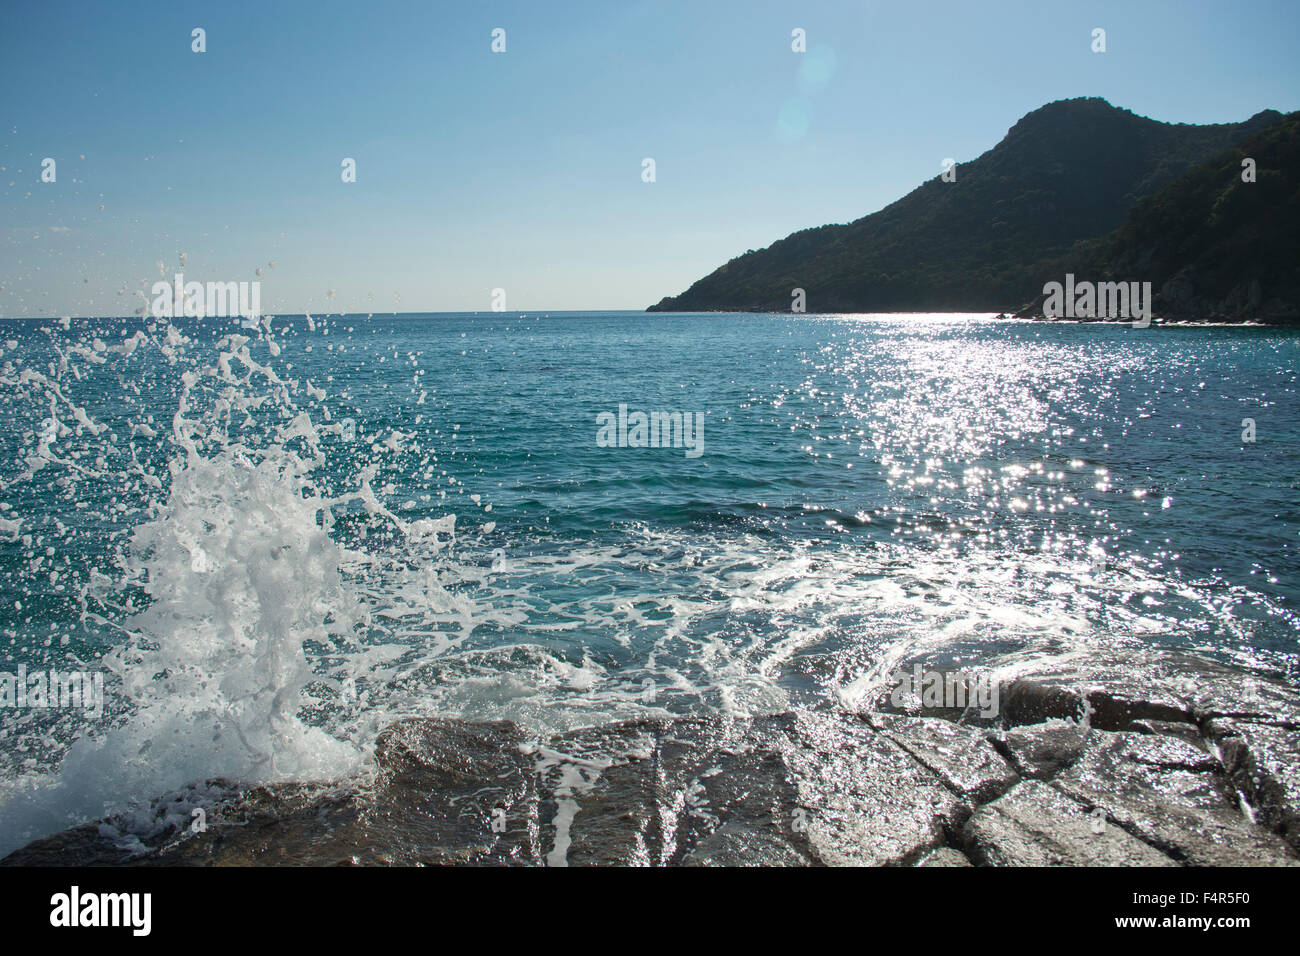 Italy, Europe, Sardinia, Costa Rei, Cala Sinizias, coast, rock, cliff, sea, wave, surf, foam Stock Photo